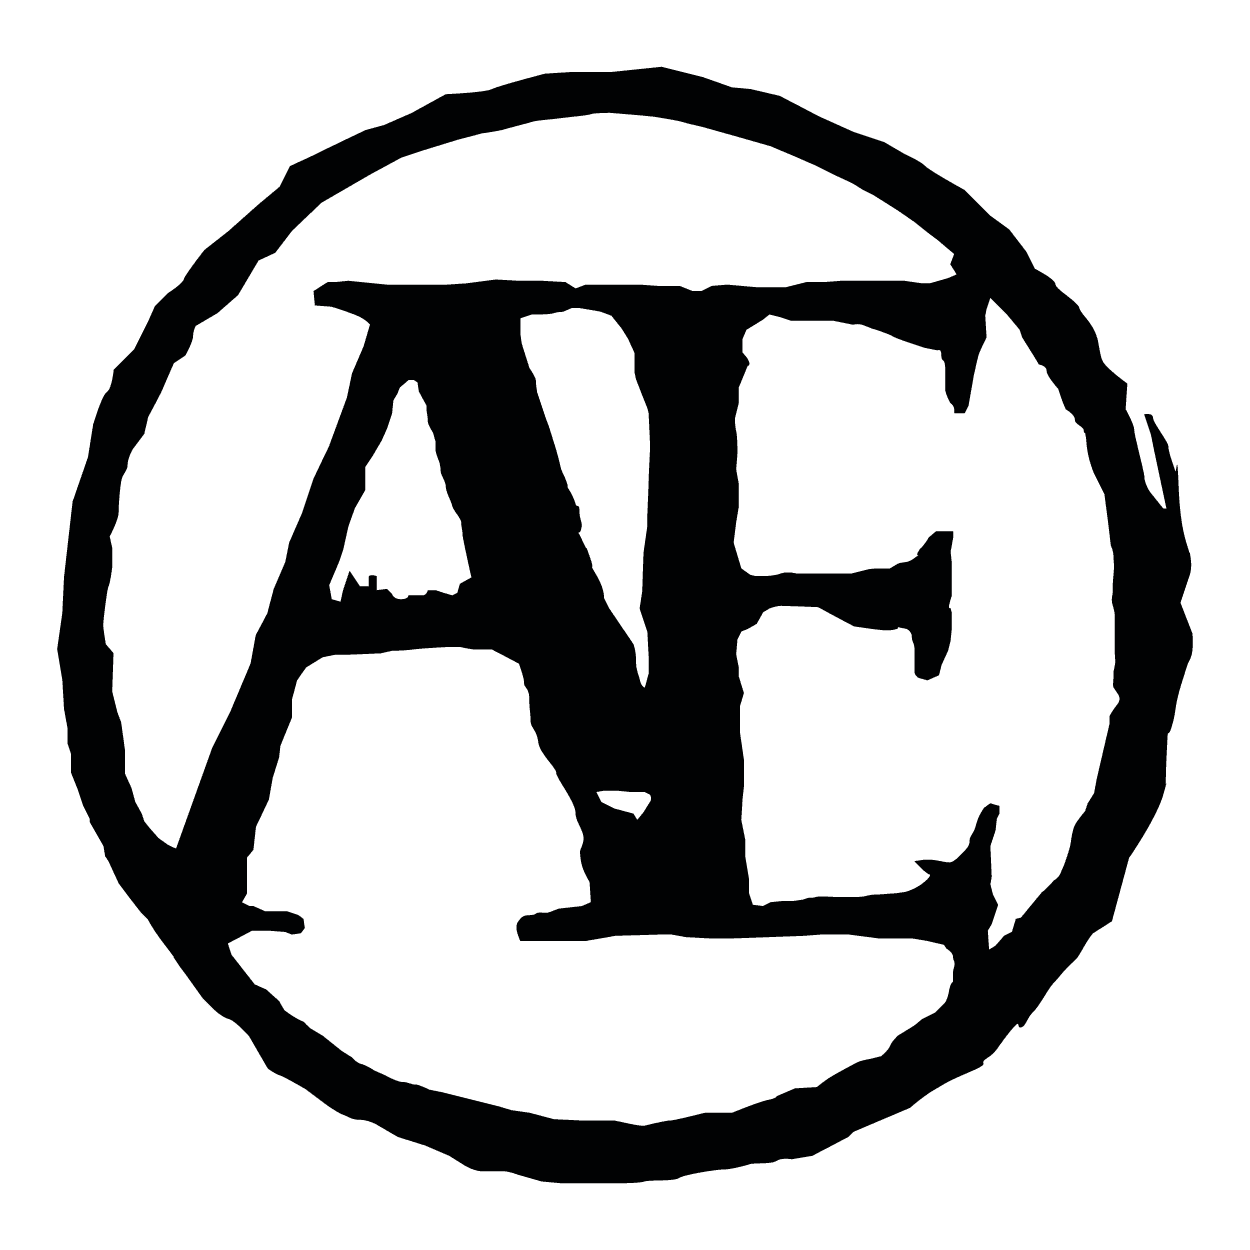 Arch Enemy Logo png